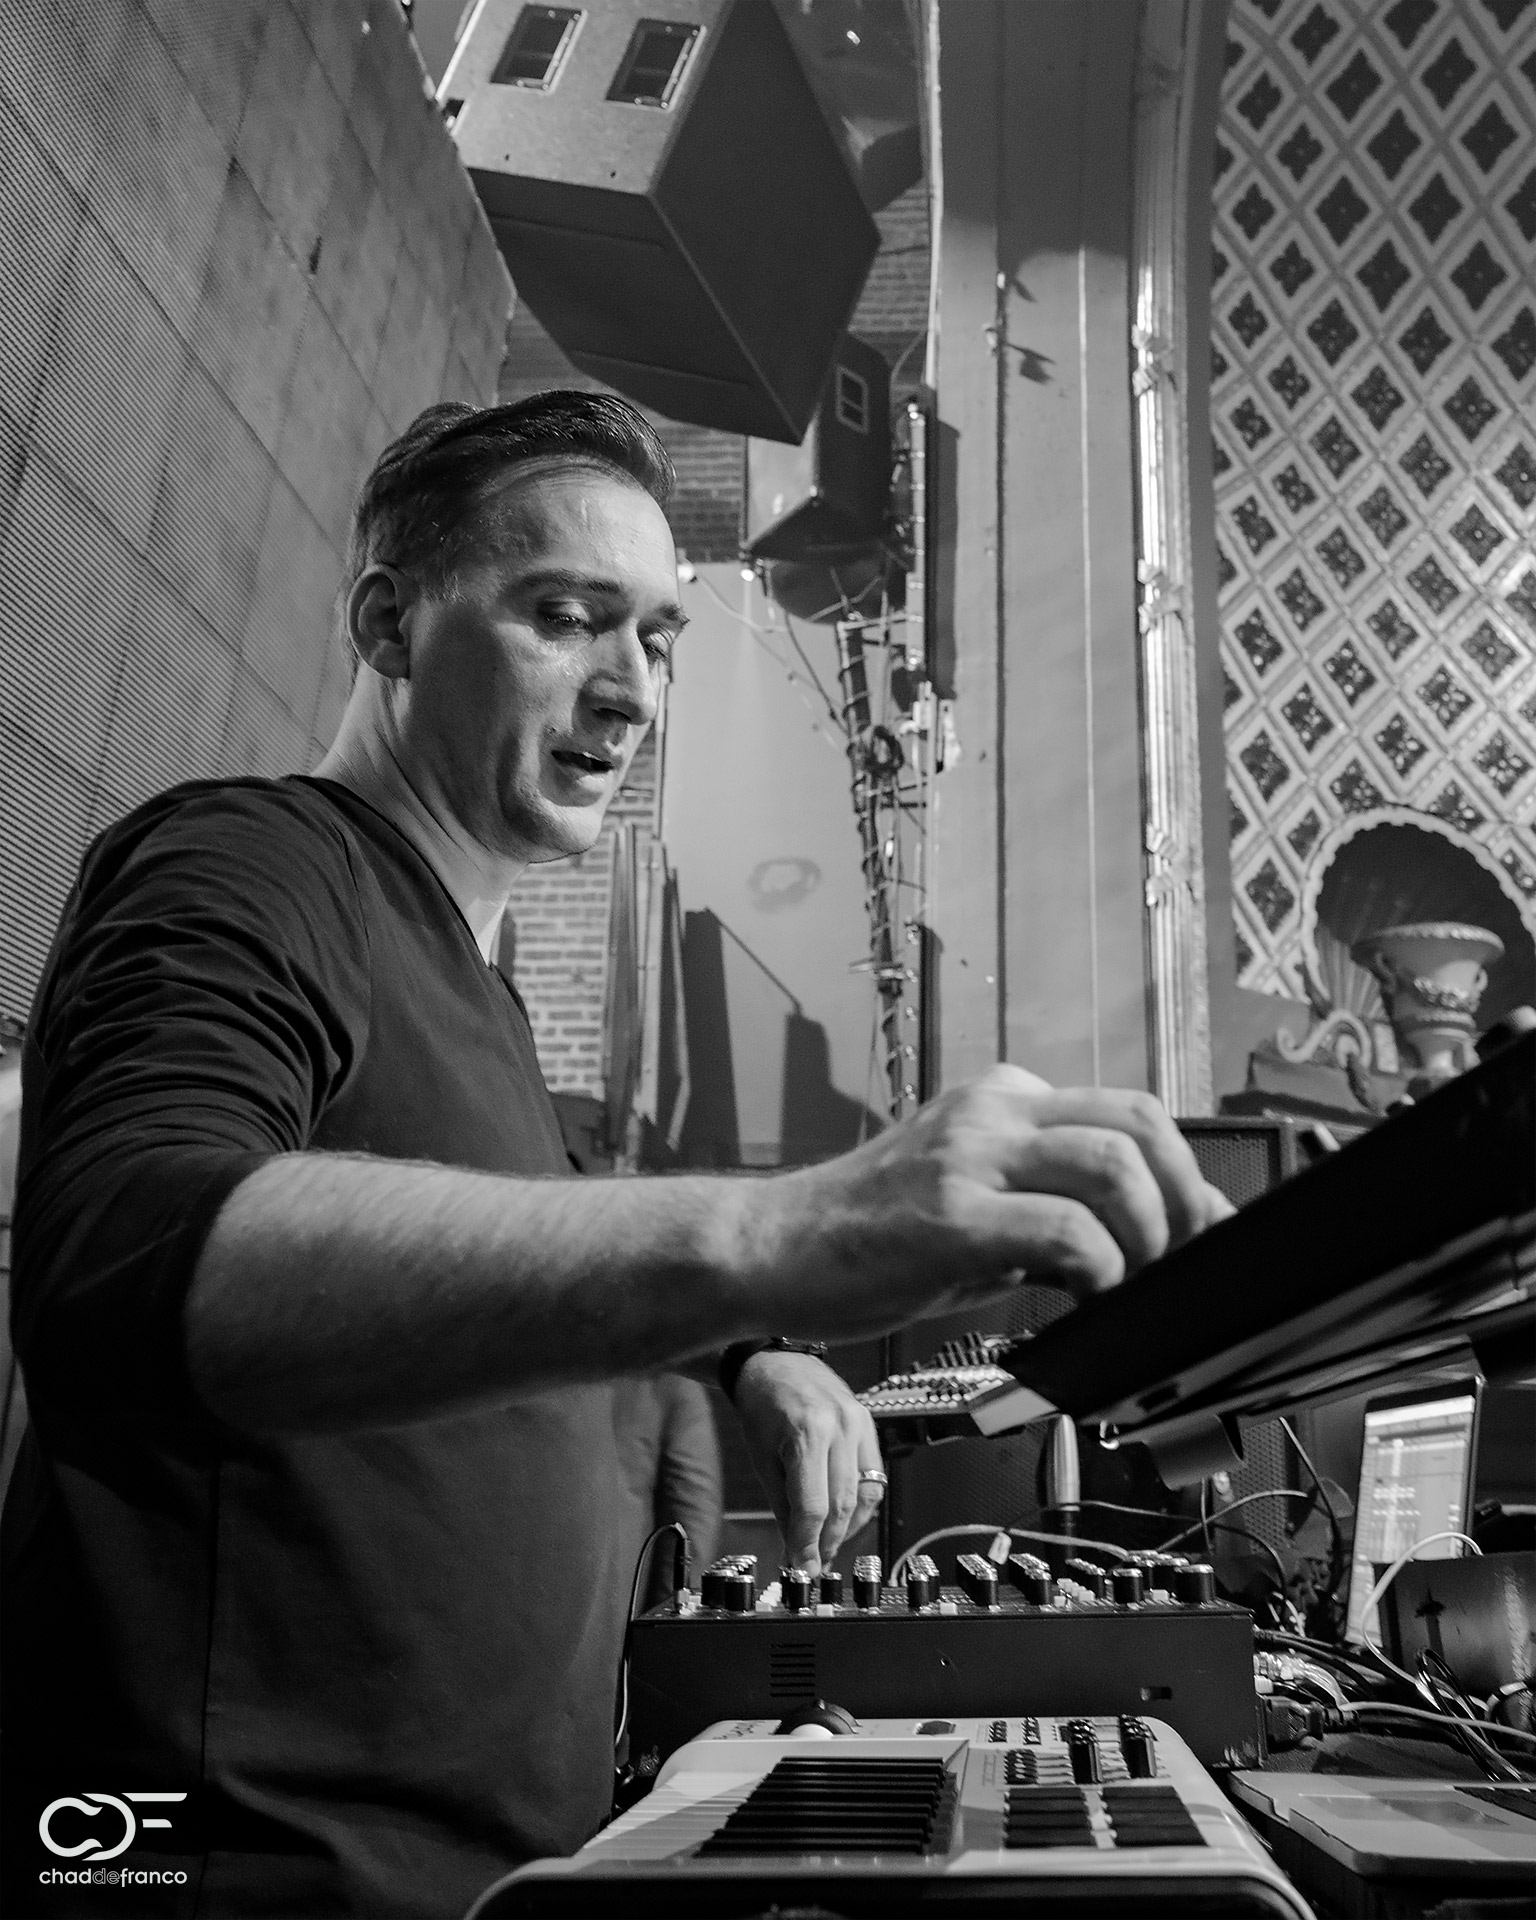 Paul van Dyk in front of his DJ setup